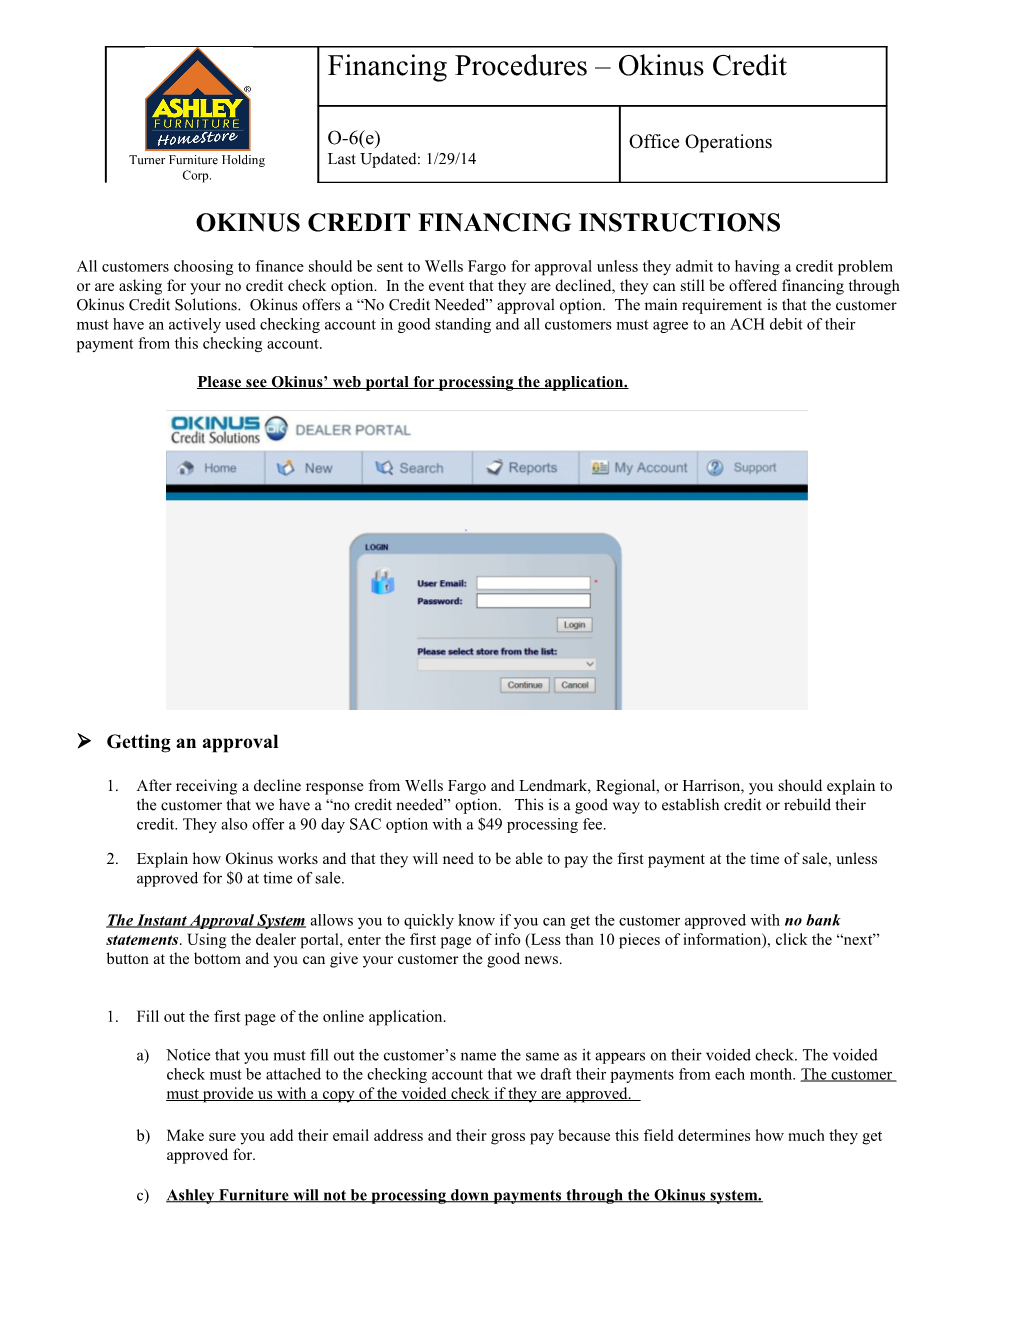 Okinus Credit Financing Instructions